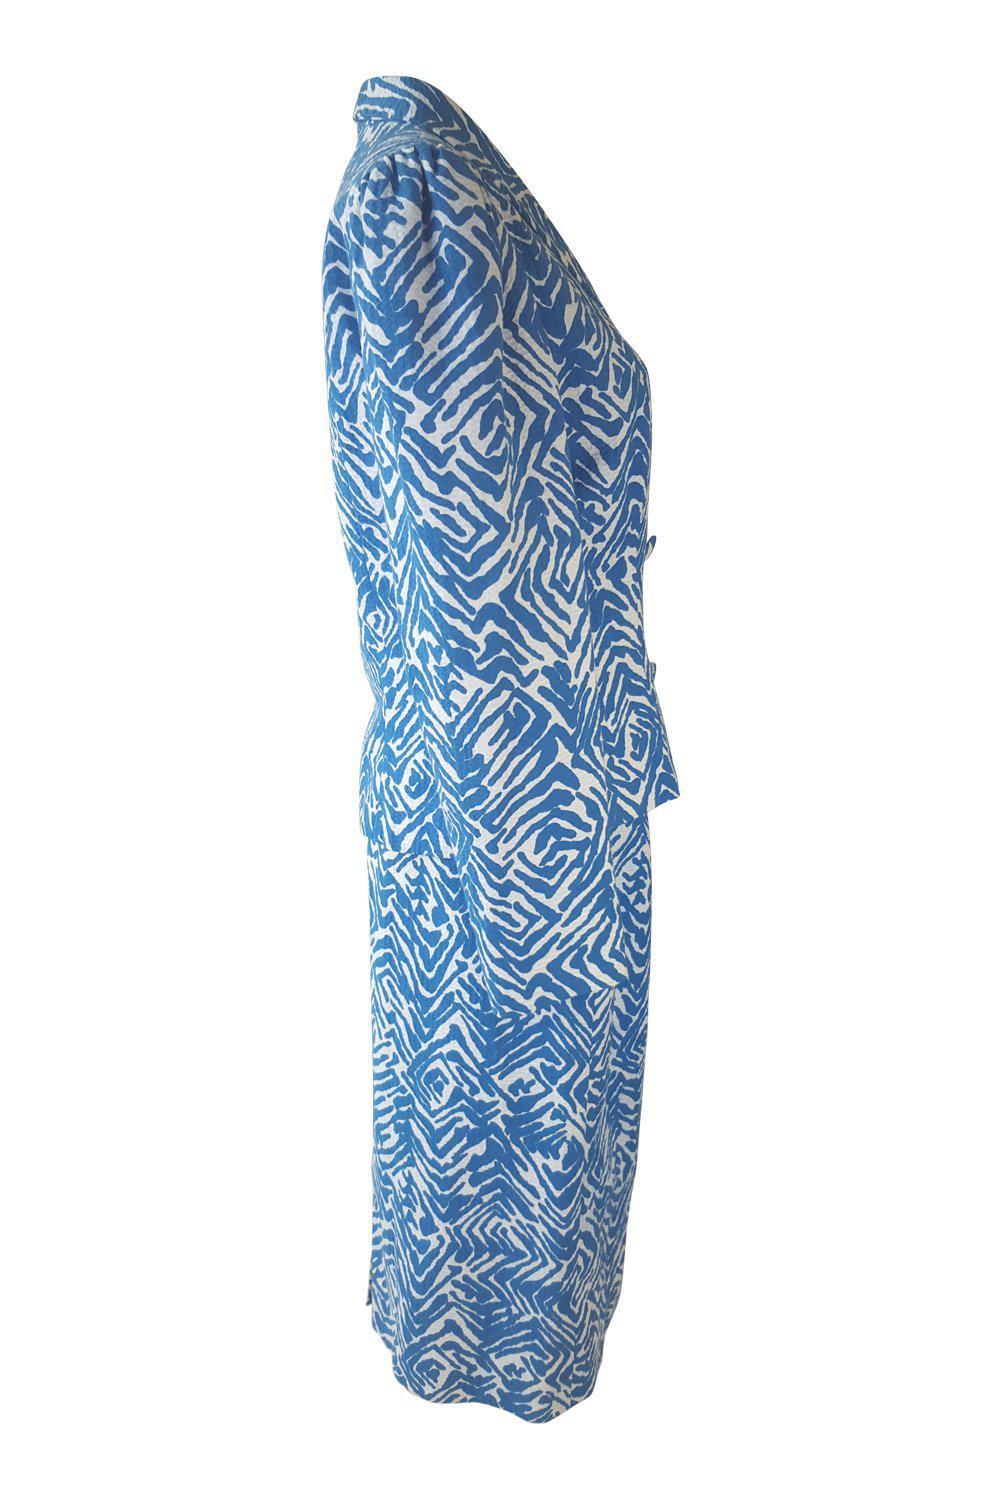 SARAH SPENCER Vintage Blue White Abstract Print Skirt Suit (12)-Sarah Spencer-The Freperie